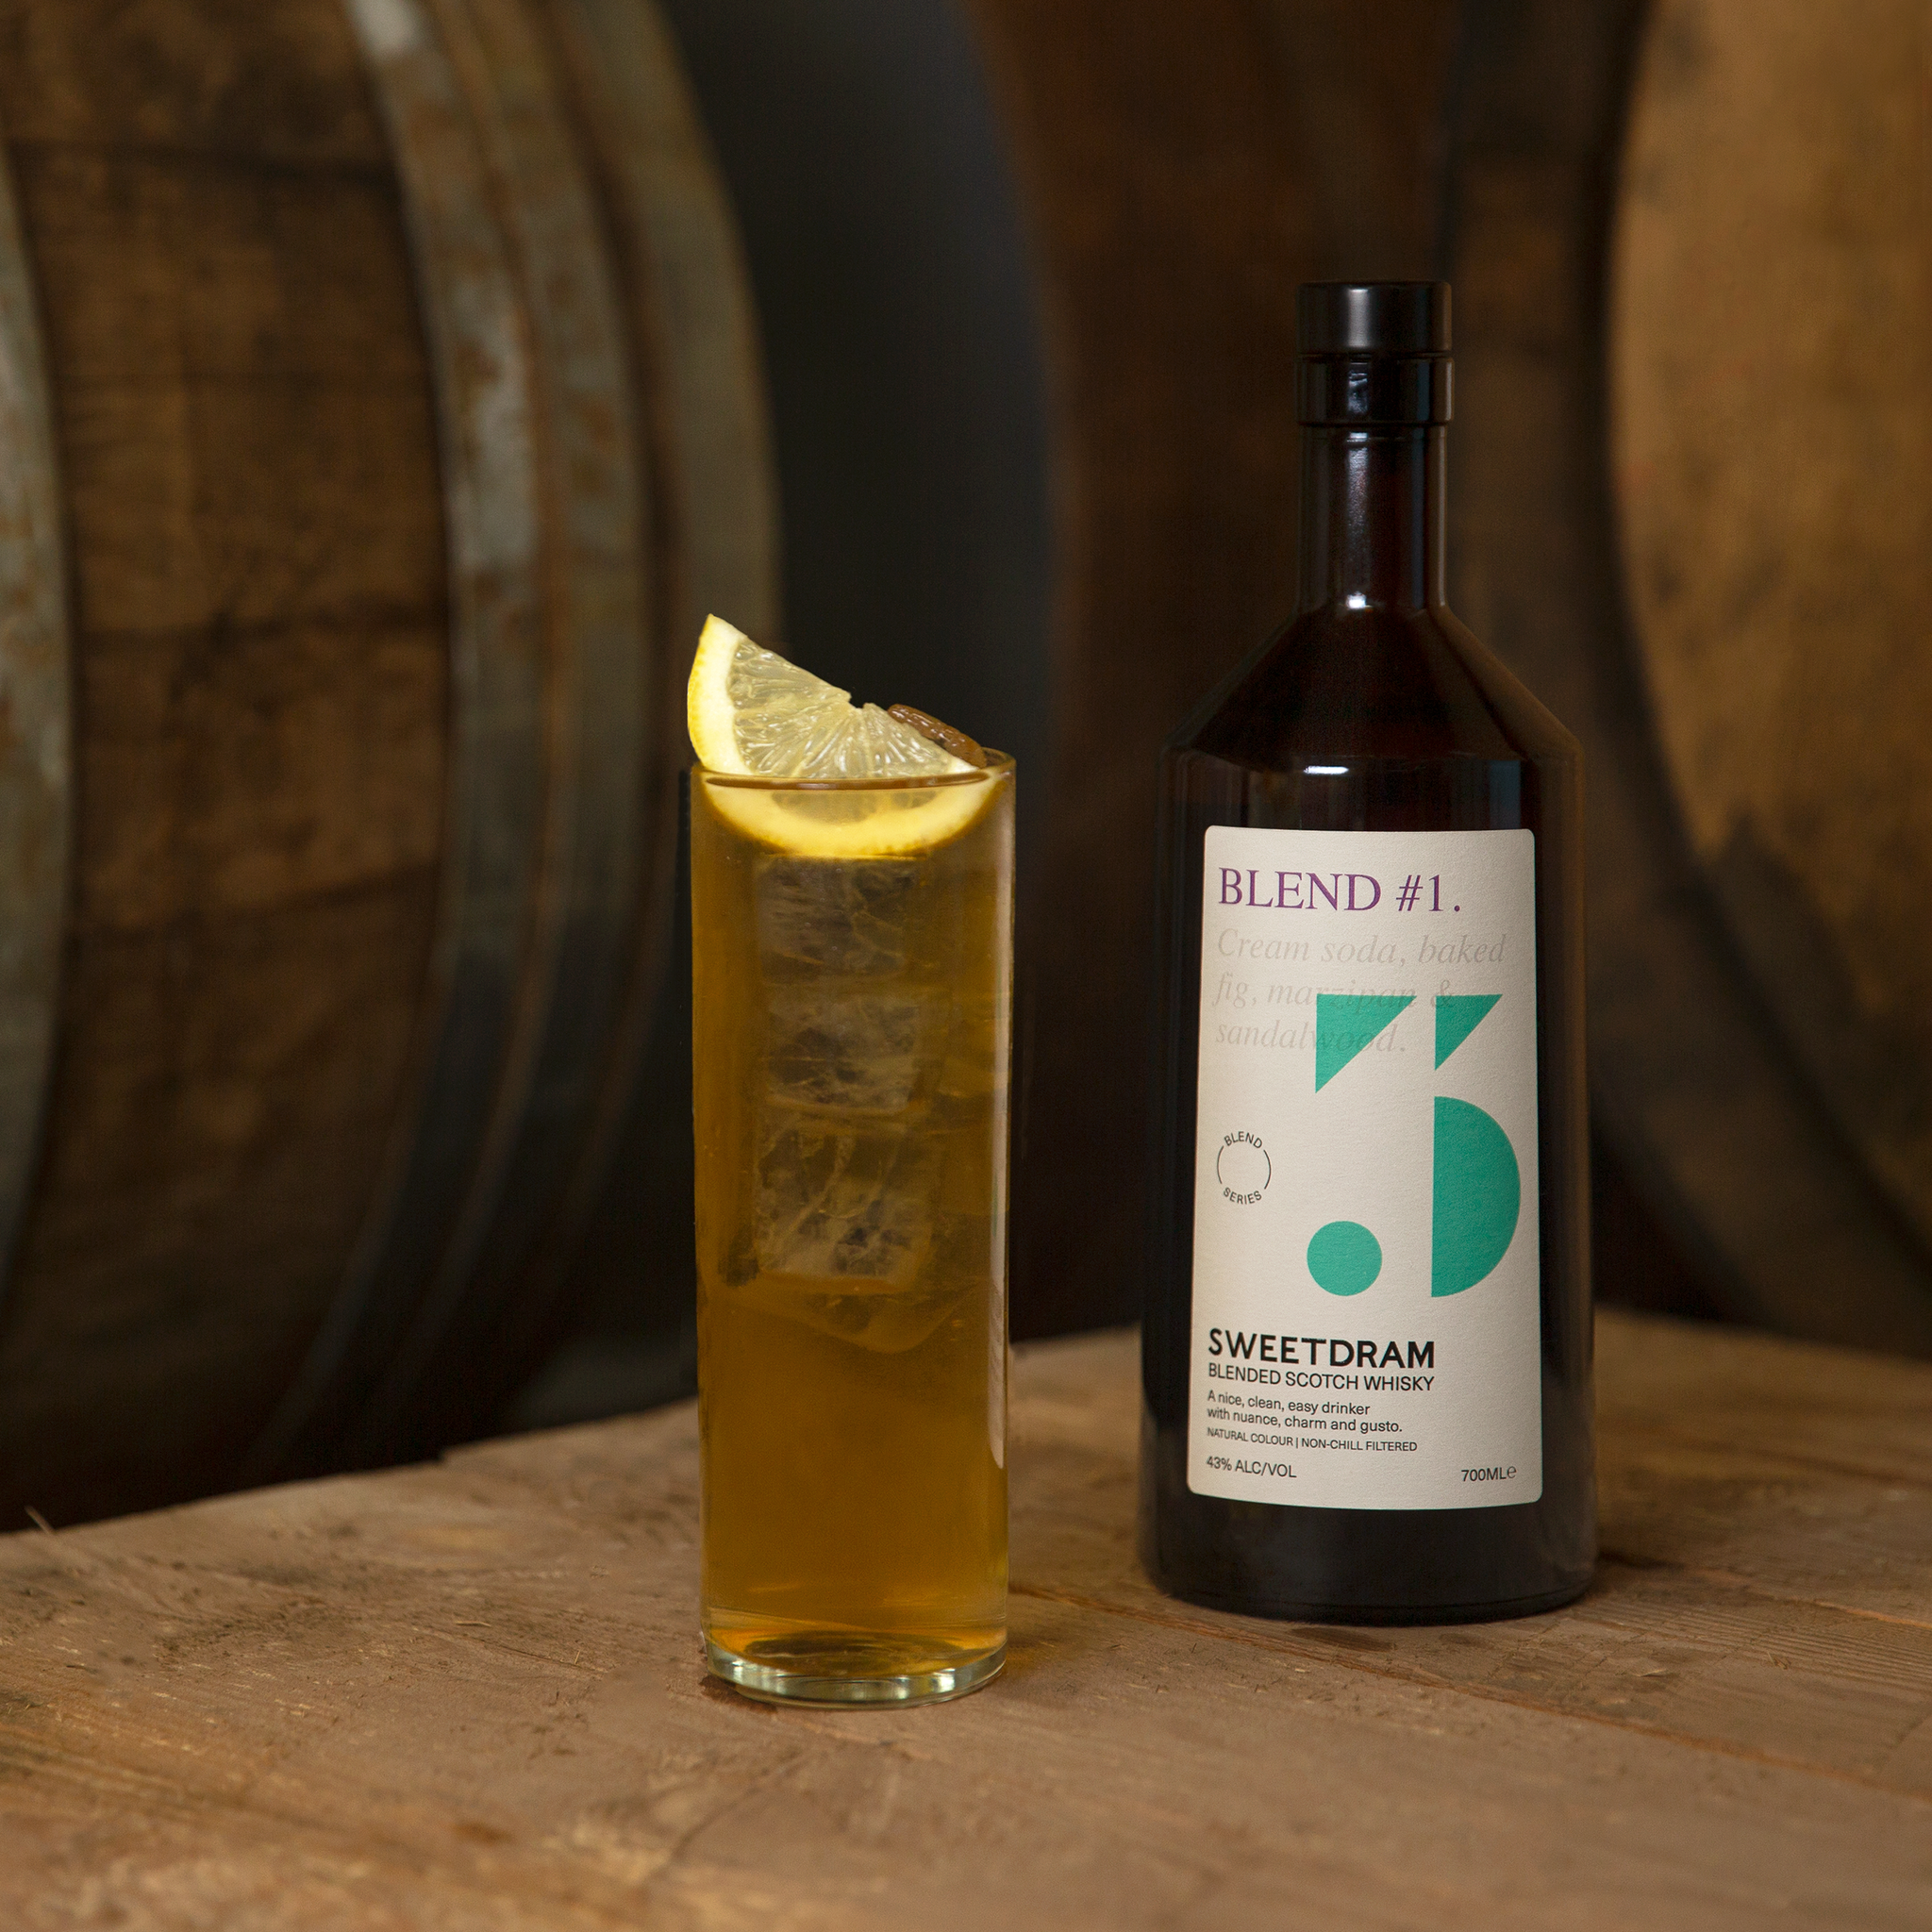 Brown 700ml Blend #1 bottle on pallet next to highball glass of Blended Whisky and Ginger with lemon wedge garnish.